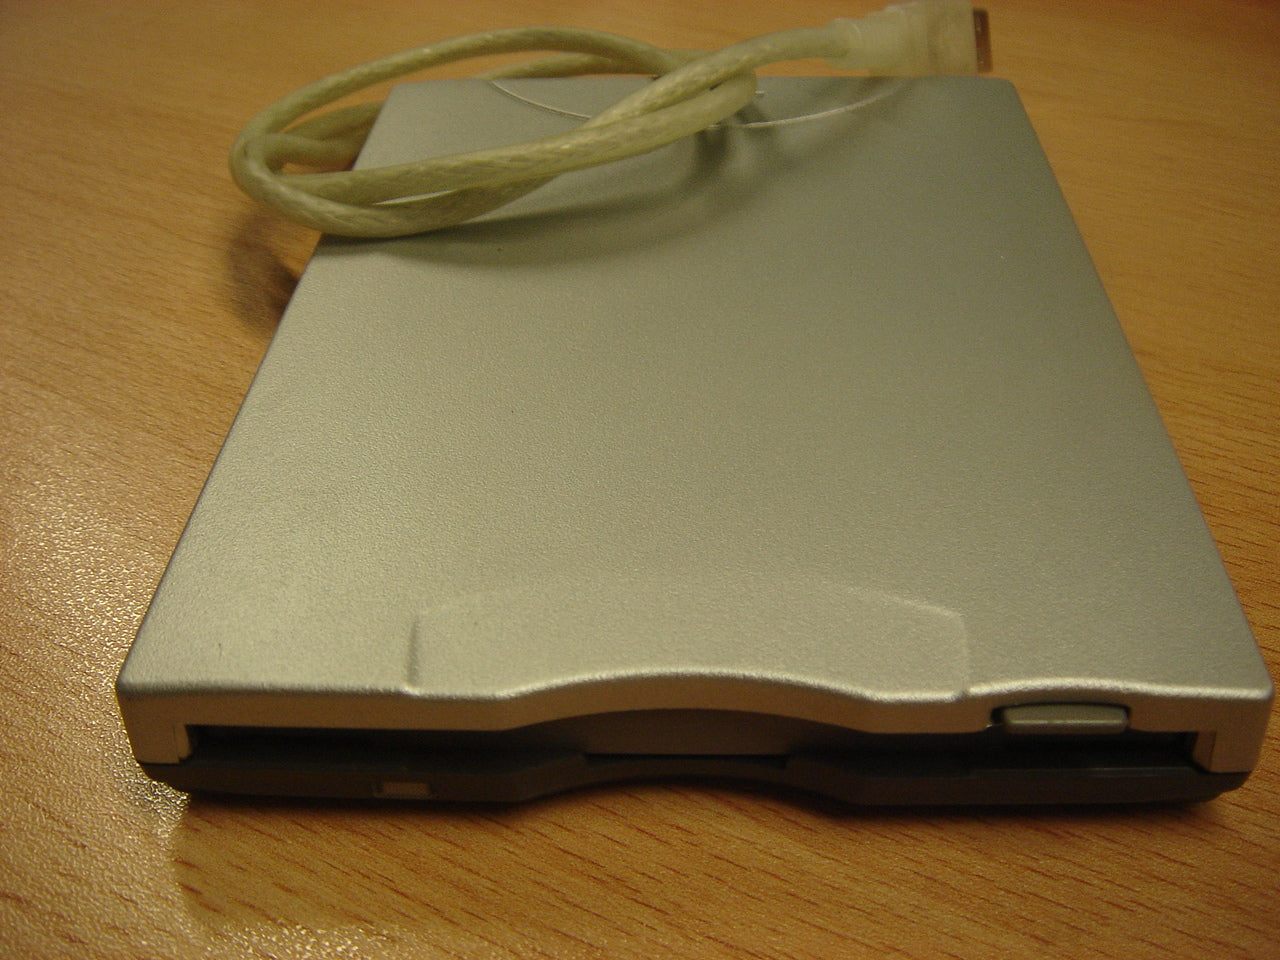 YD-8U10 - YE Data External USB Floppy Drive - USED